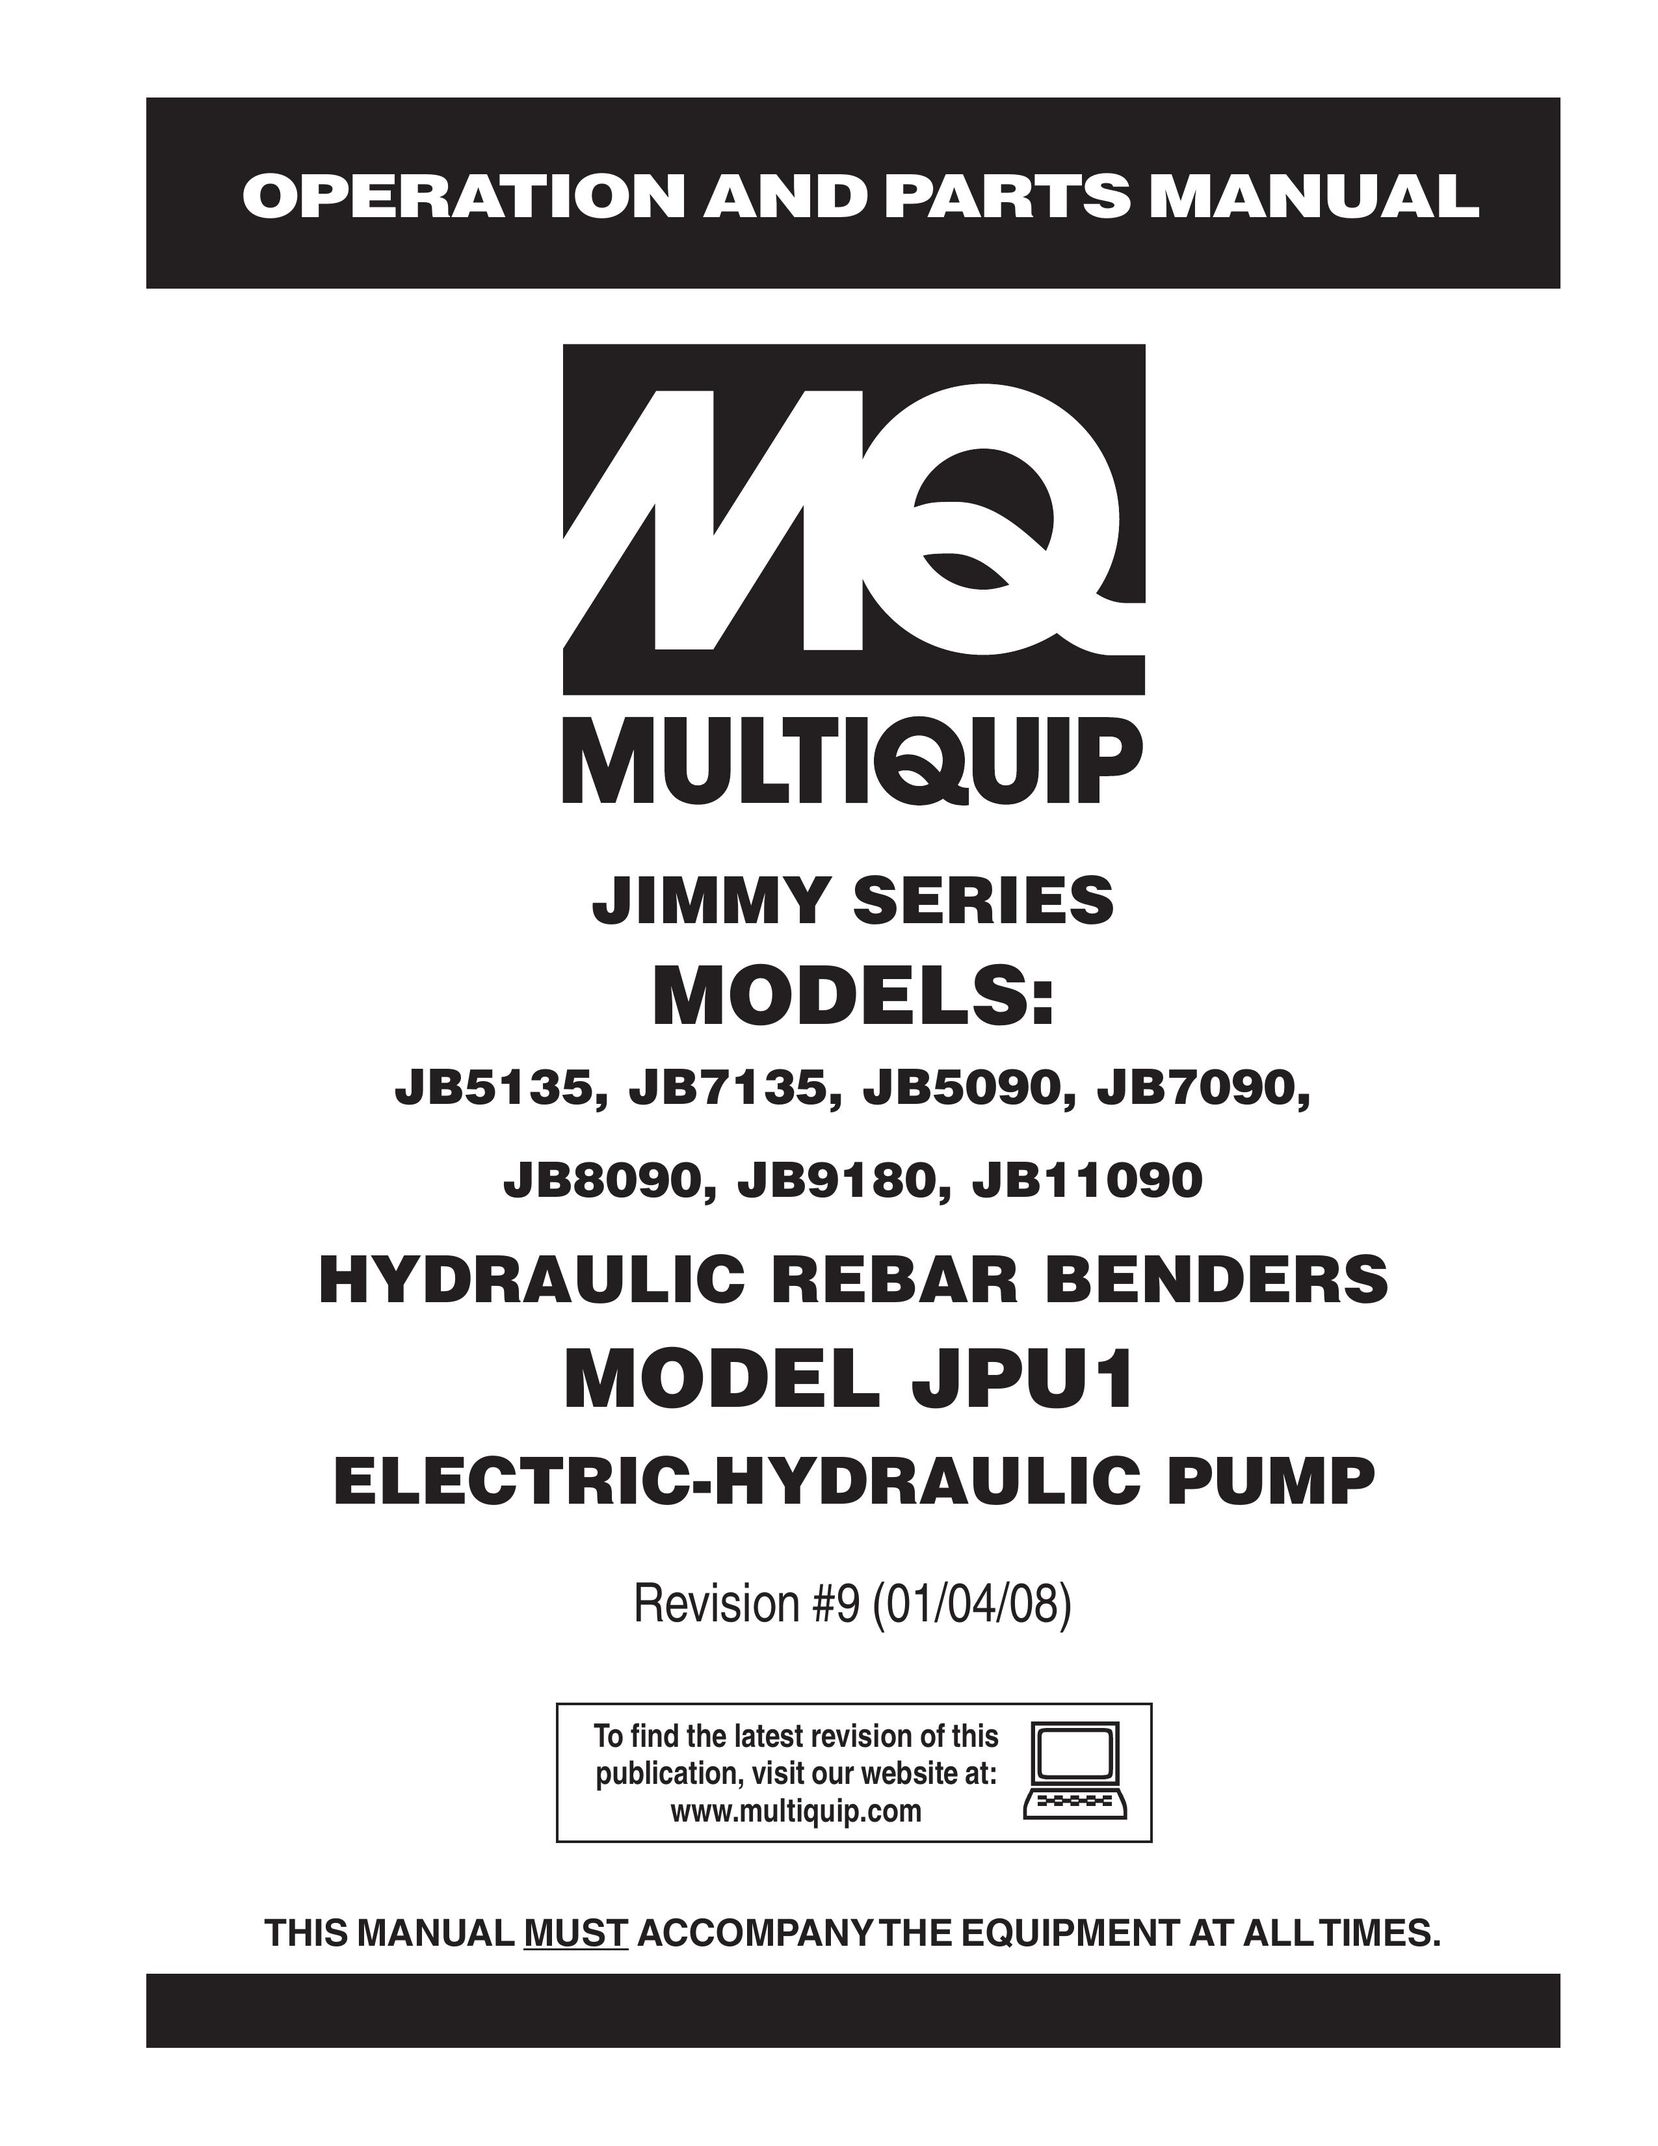 Multiquip JB5090 Heat Pump User Manual